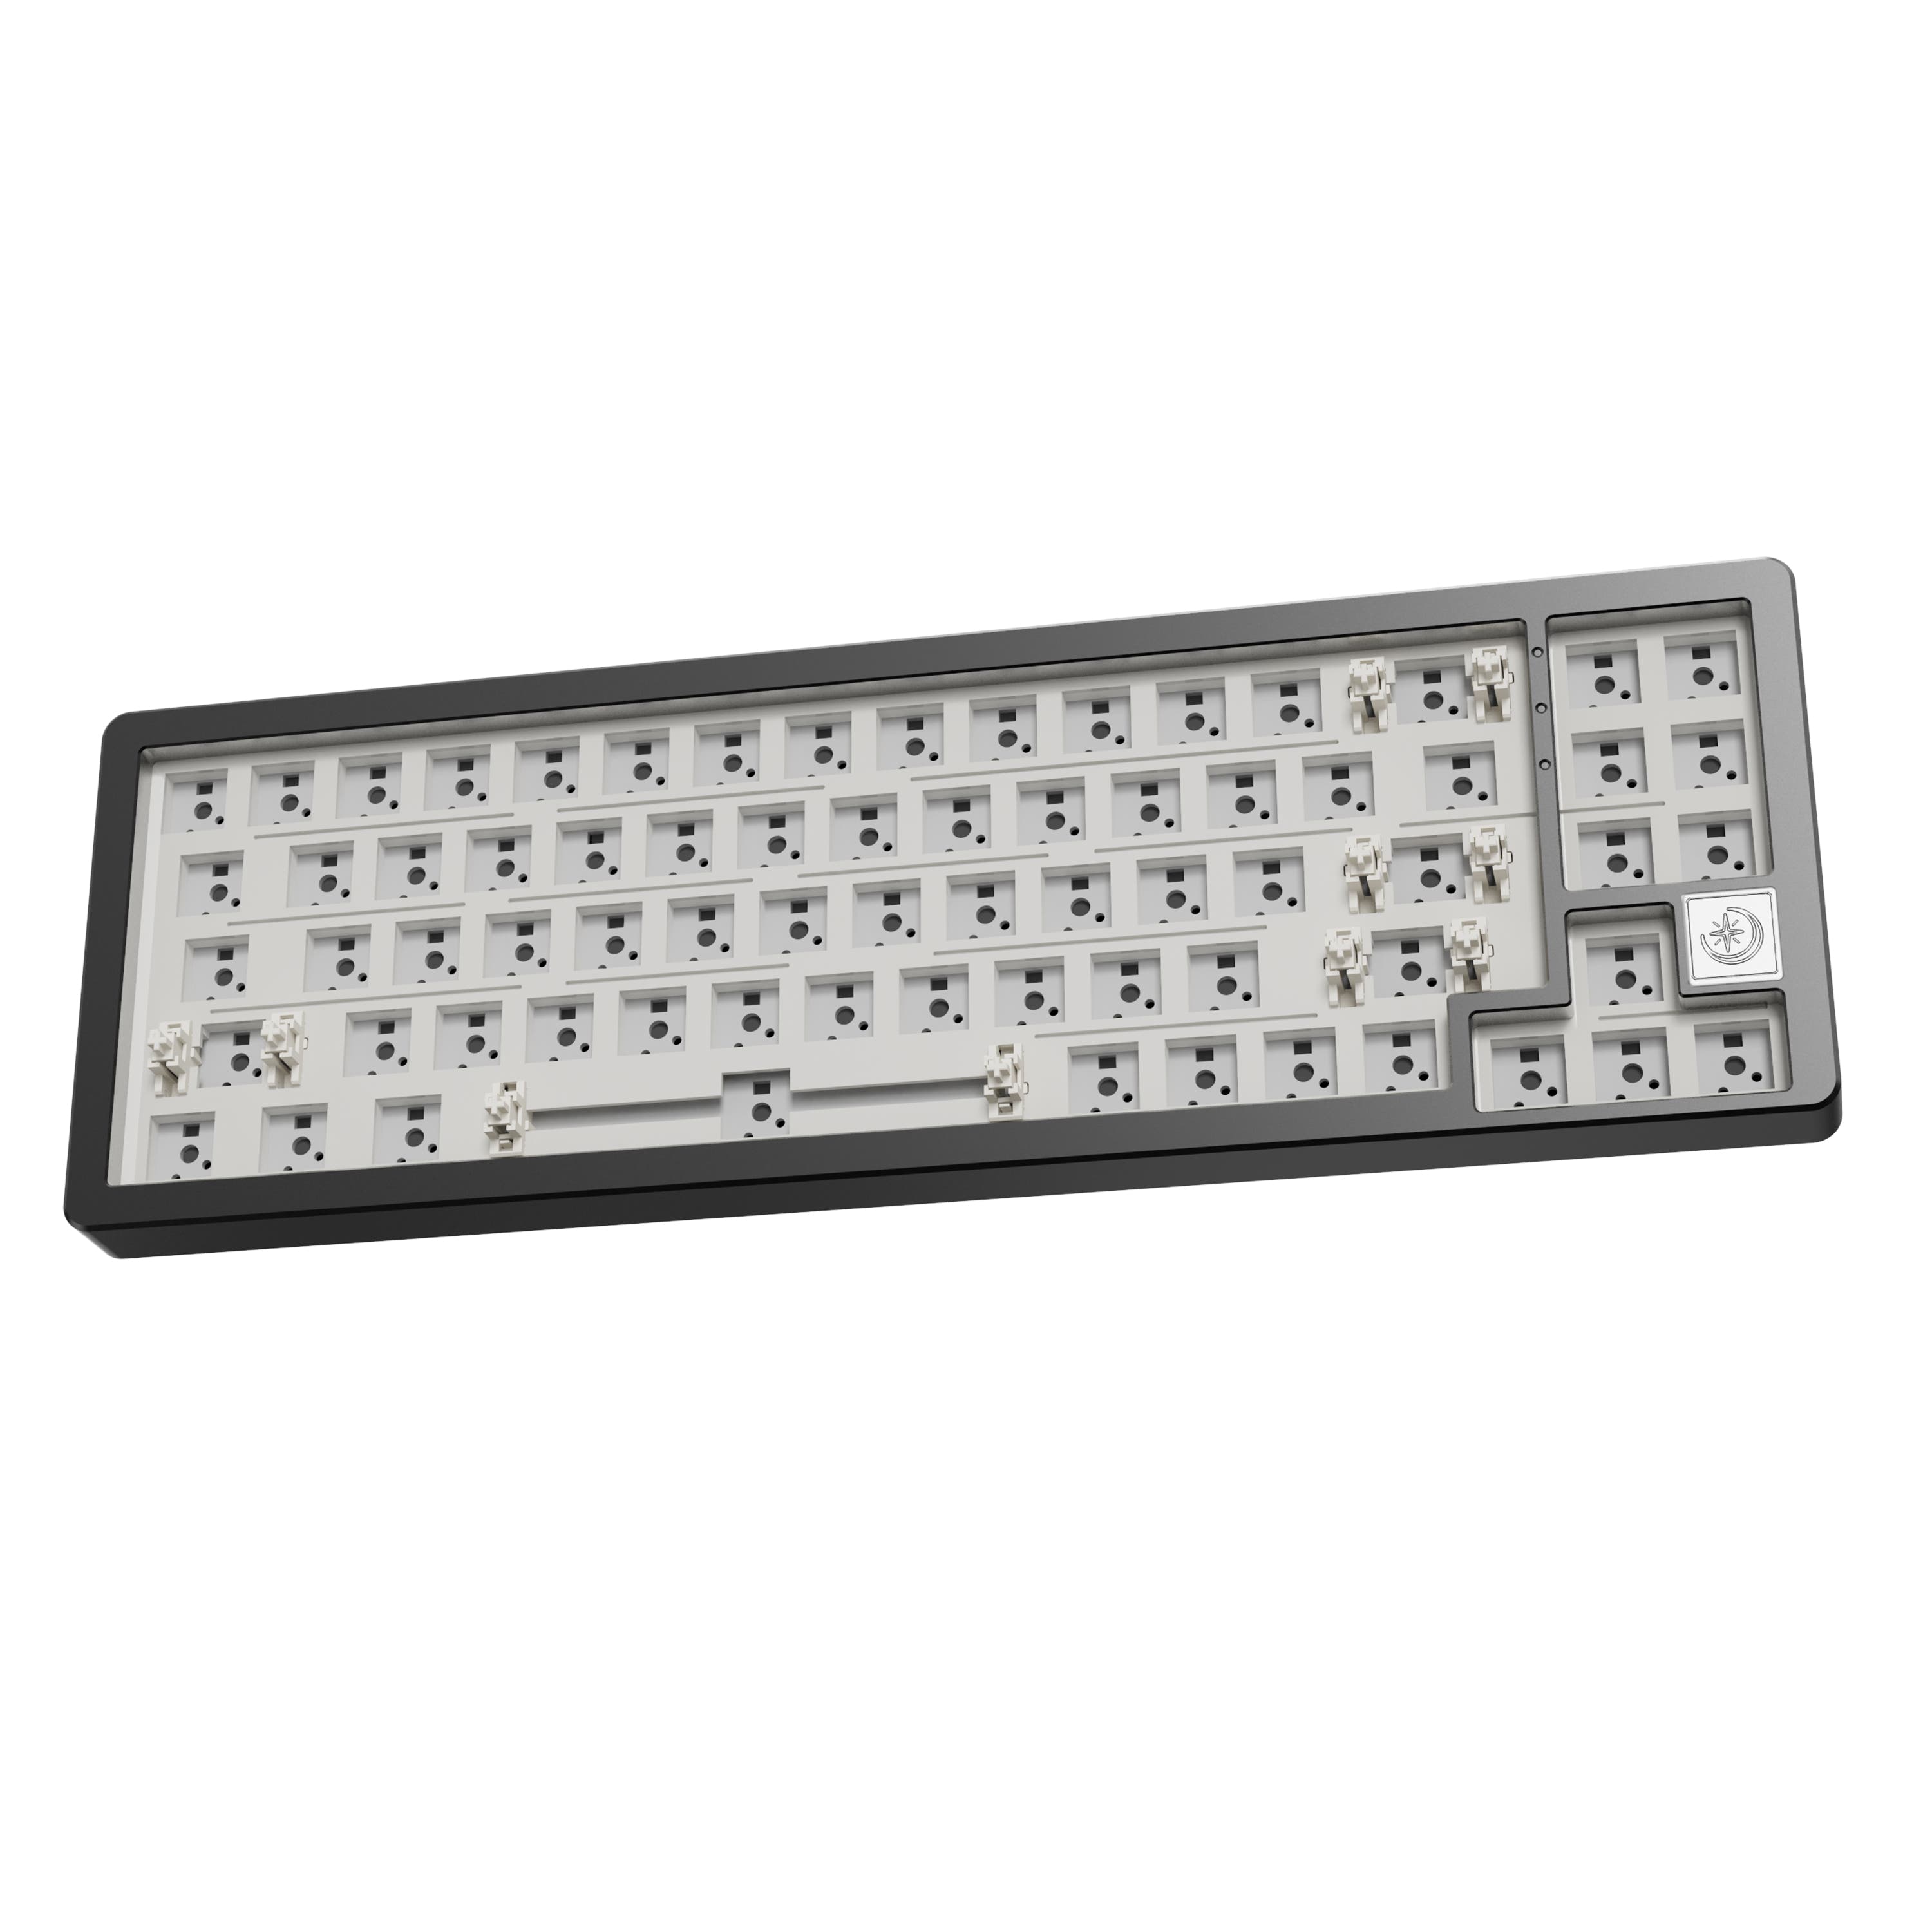 YUNZII AL71 Full Aluminum Mechanical Keyboard Black / Barebone (without switches and keycaps)